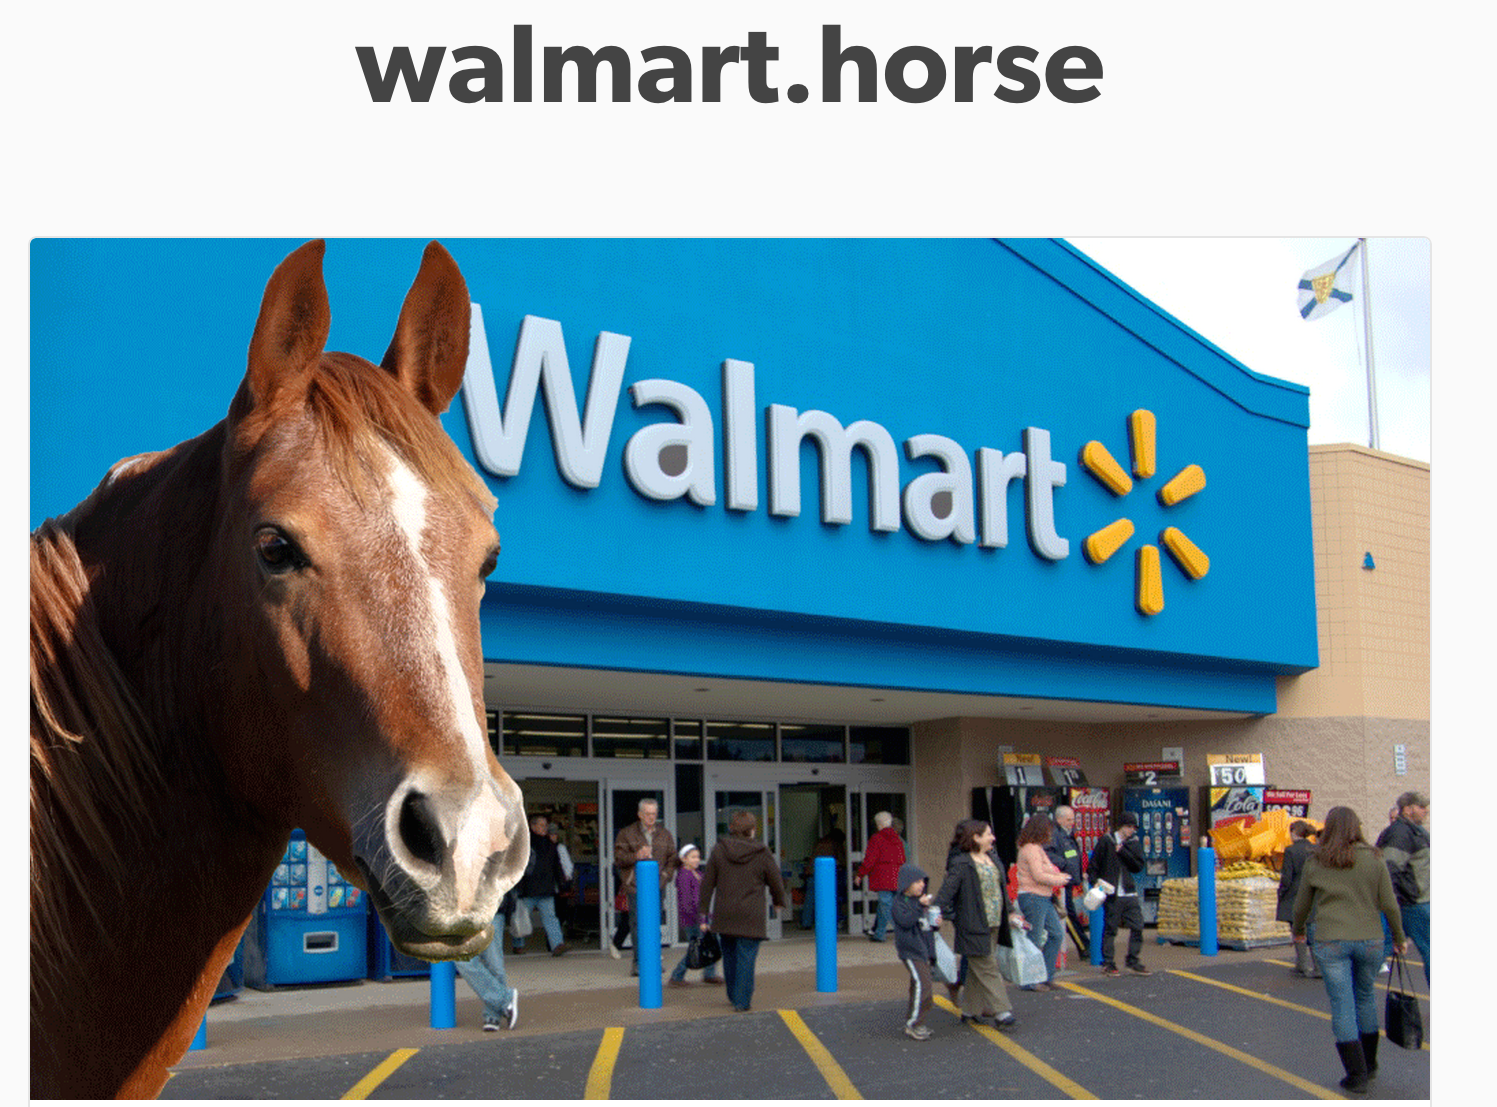 Walmart Ordered To Pay $31 Million For Retaliating Against Pharmacist Whistleblower